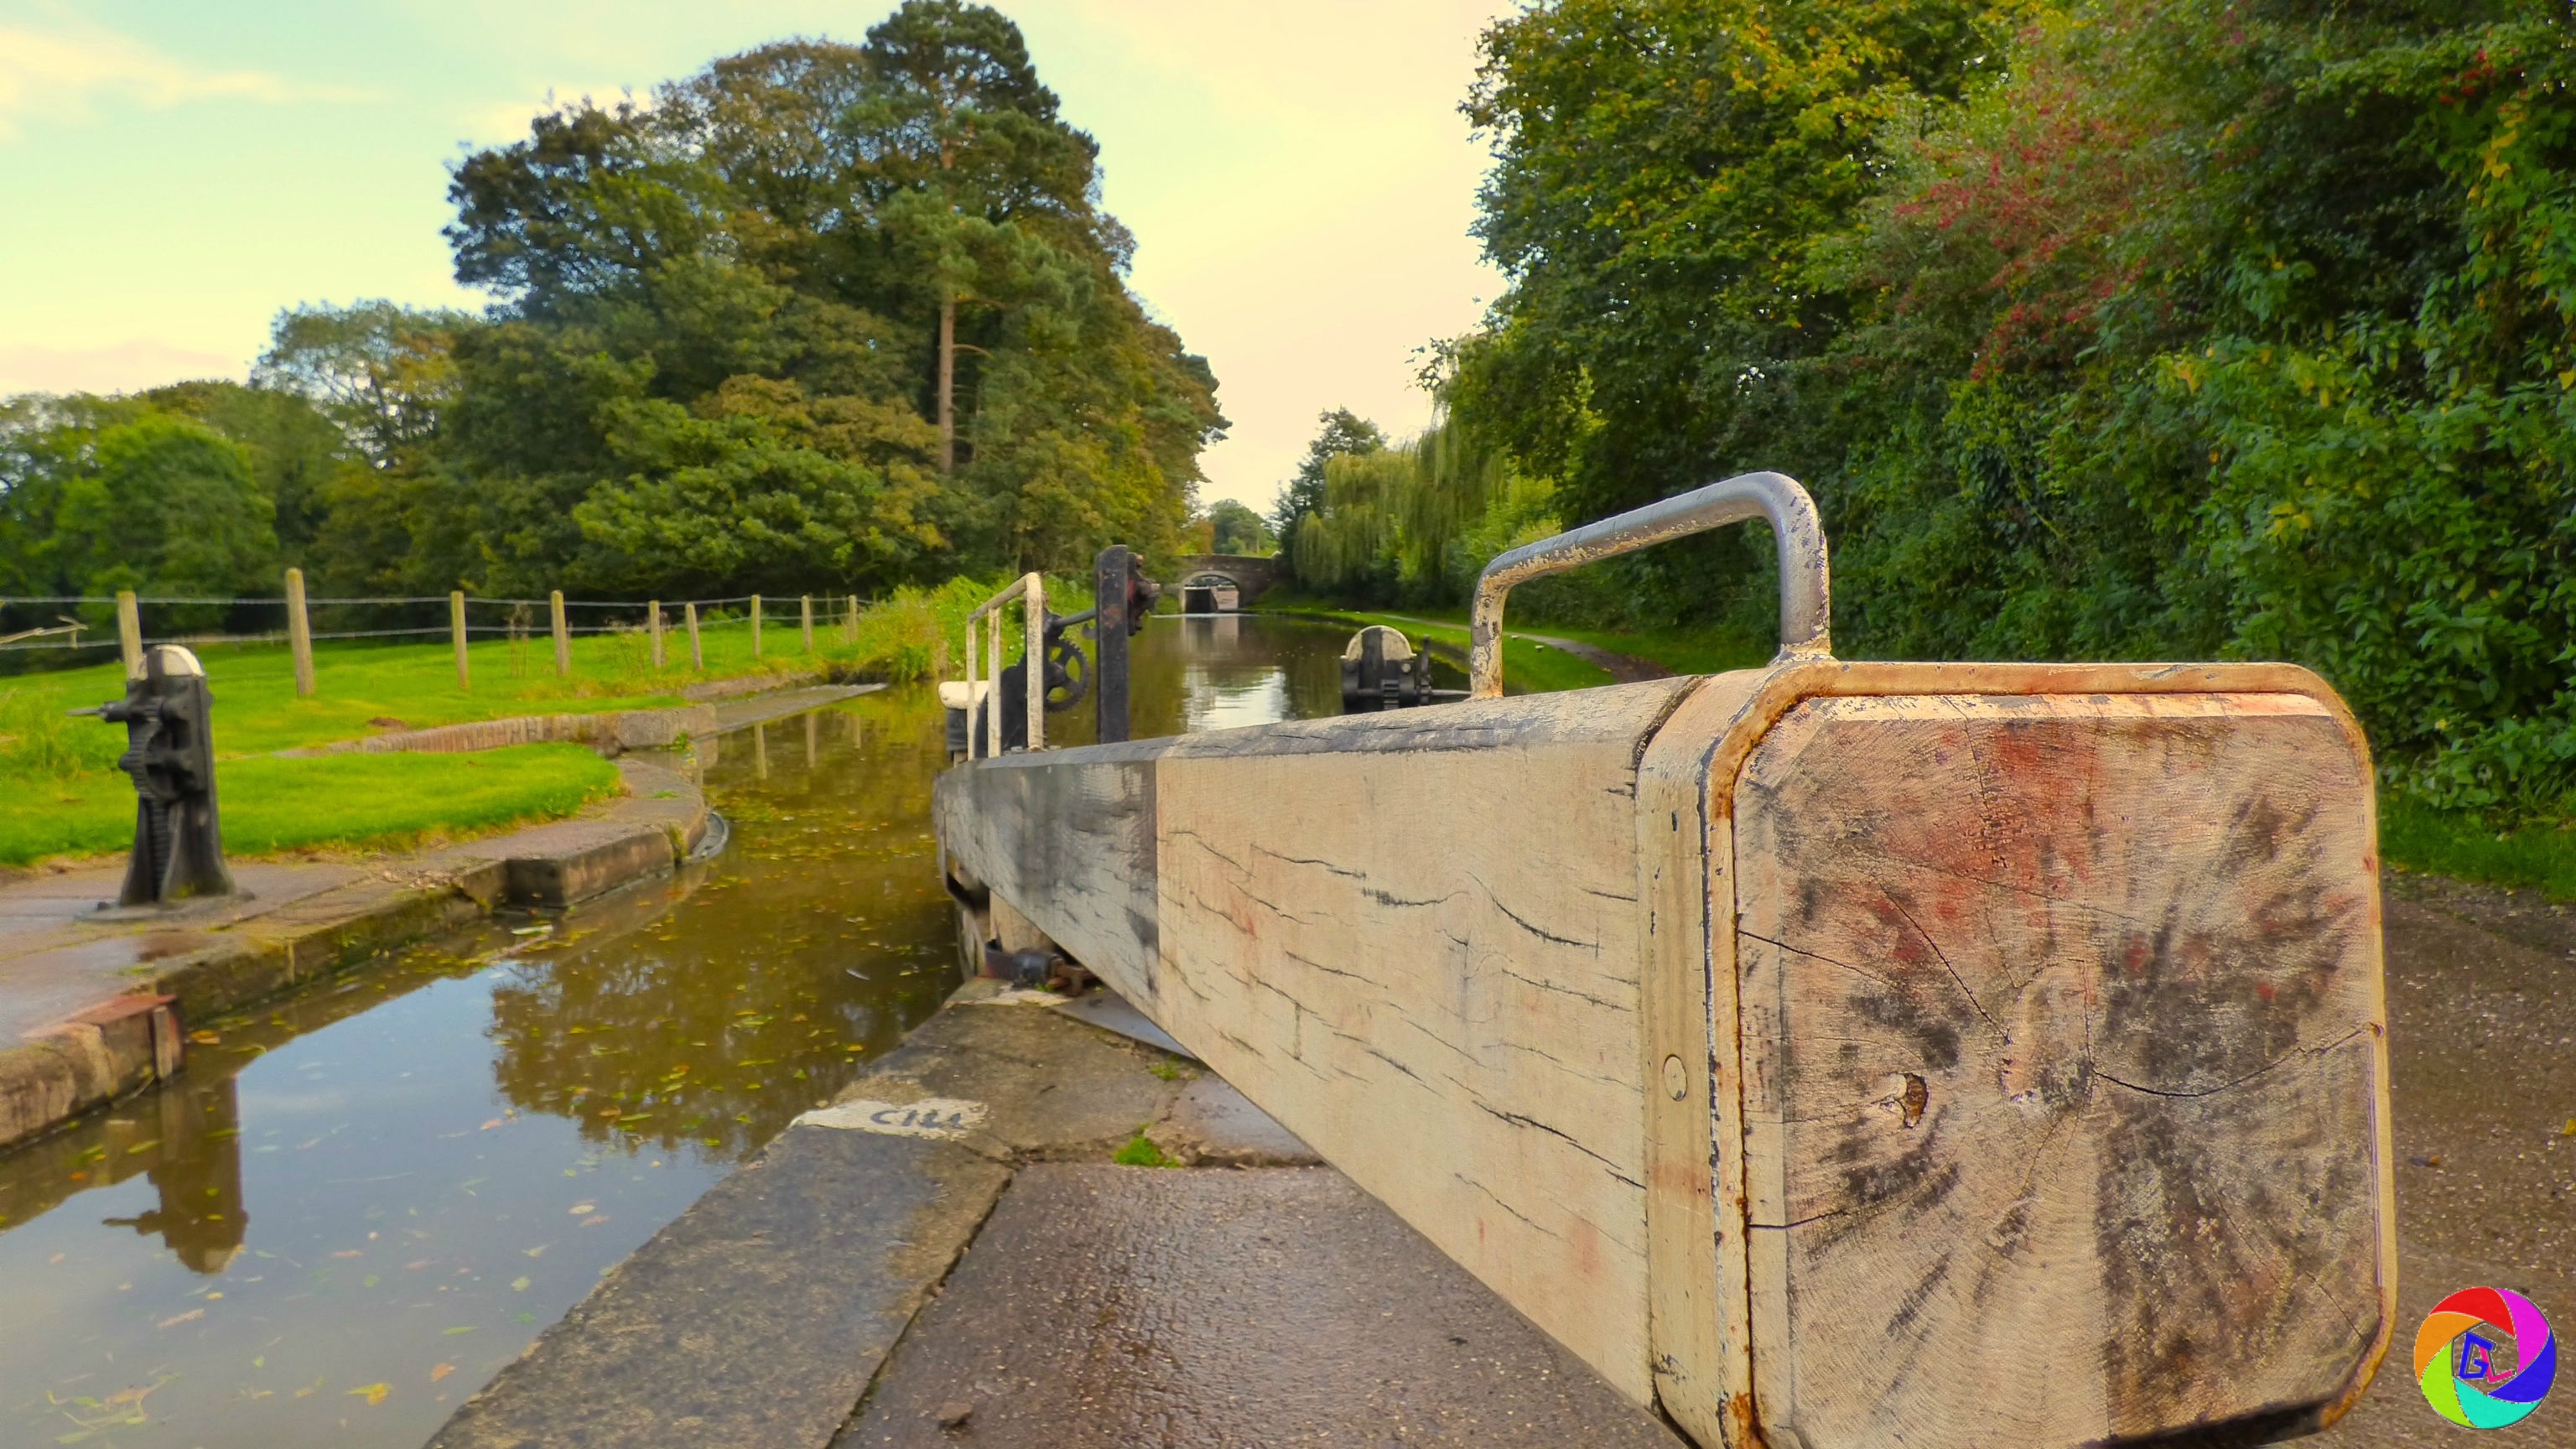 on Shropshire Union Canal